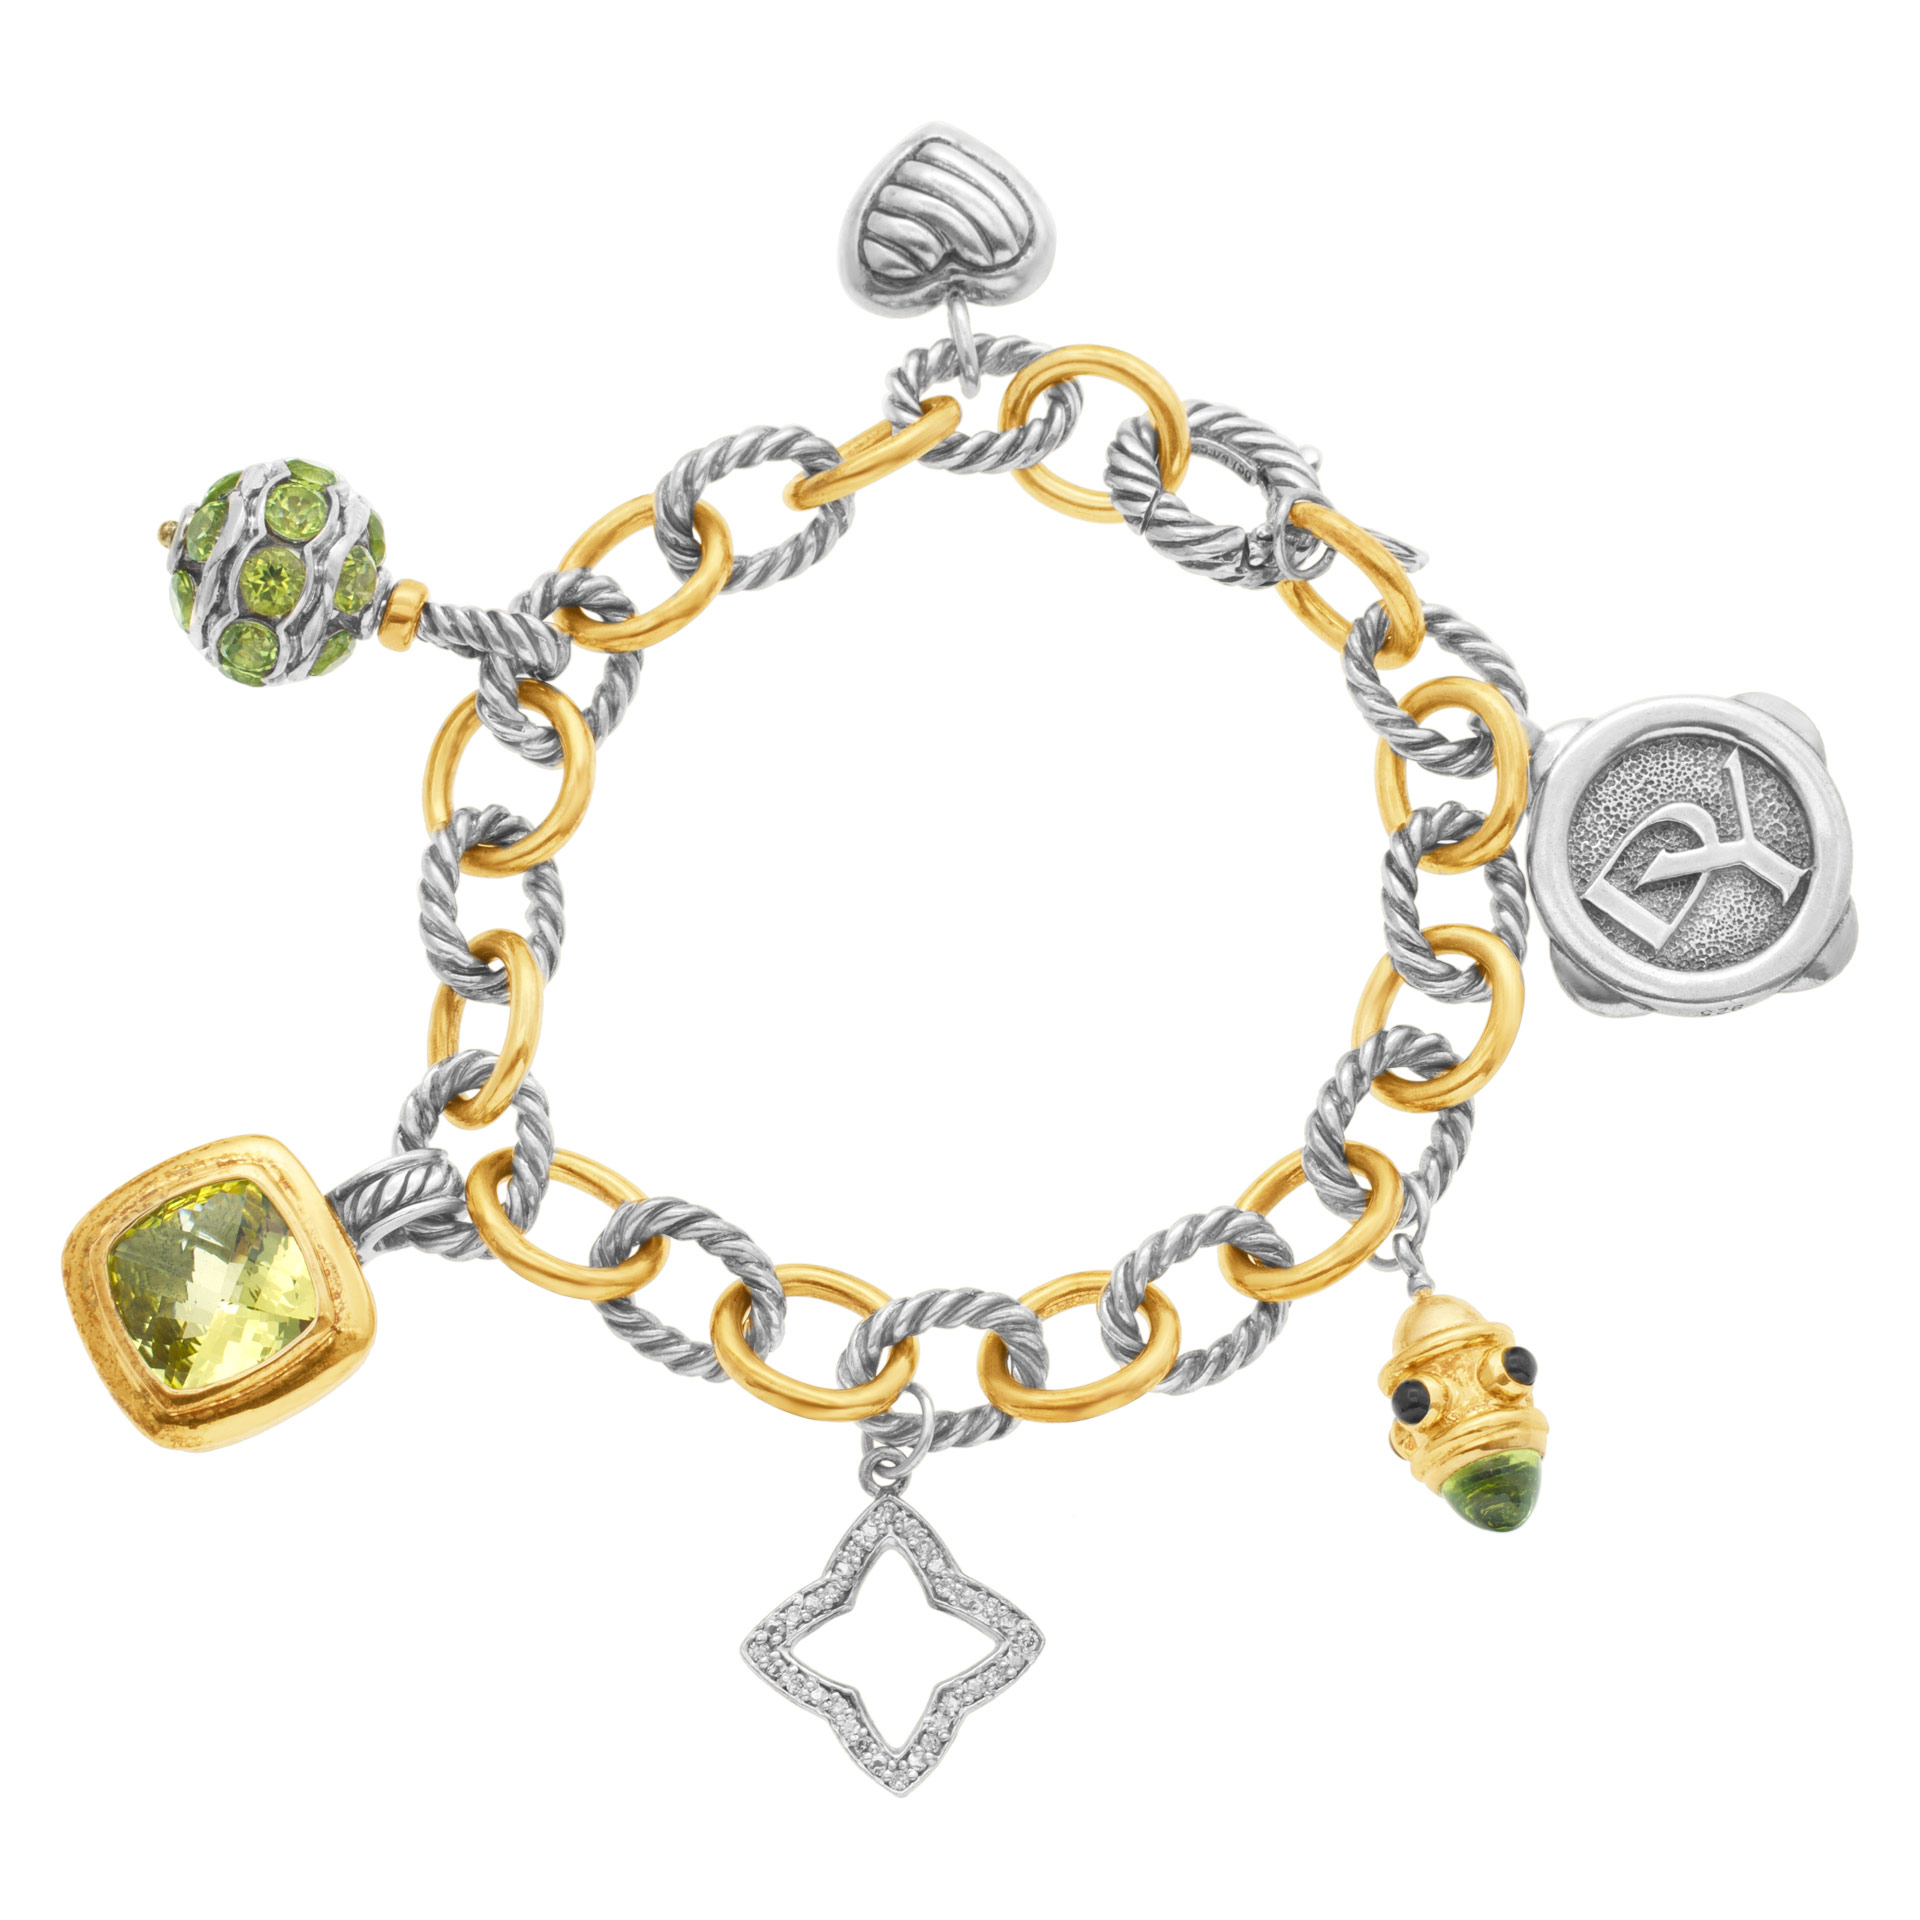 David Yurman Charm bracelet in 18k & sterling silver with 6 charms